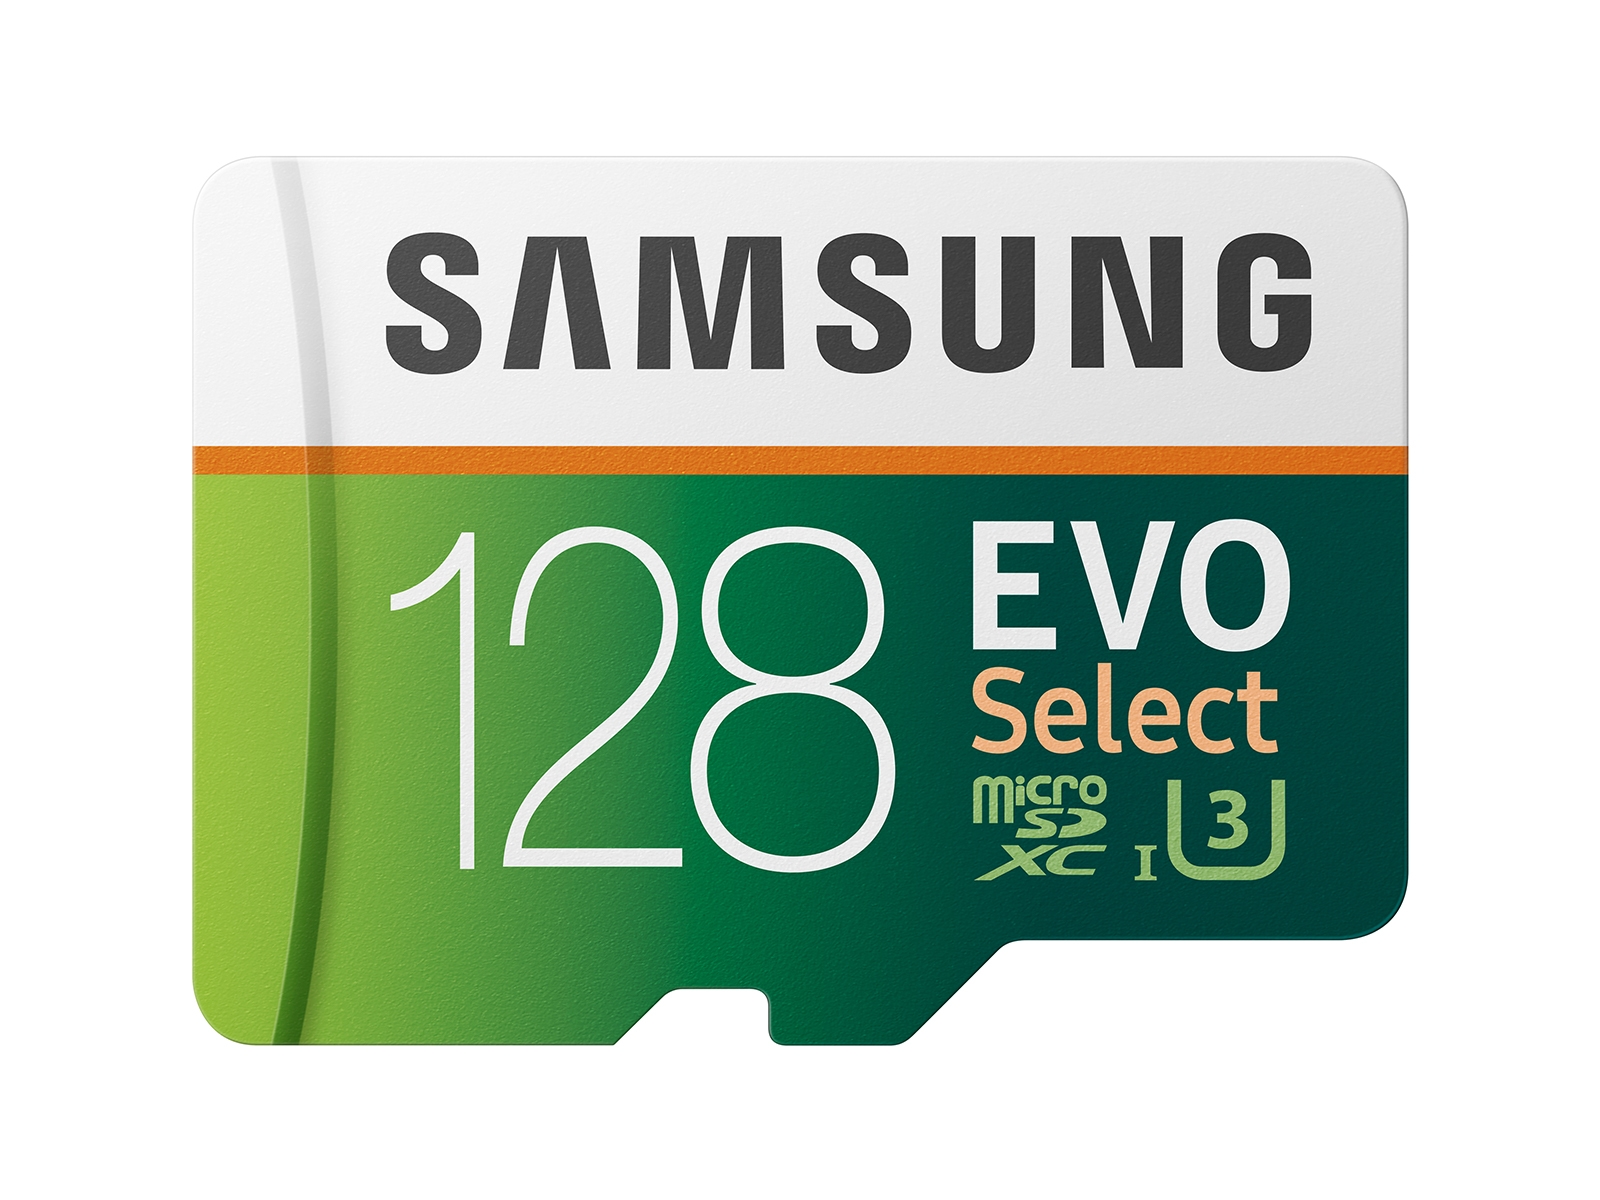 Thumbnail image of EVO Select microSDXC Memory Card 128GB - 3 Pack